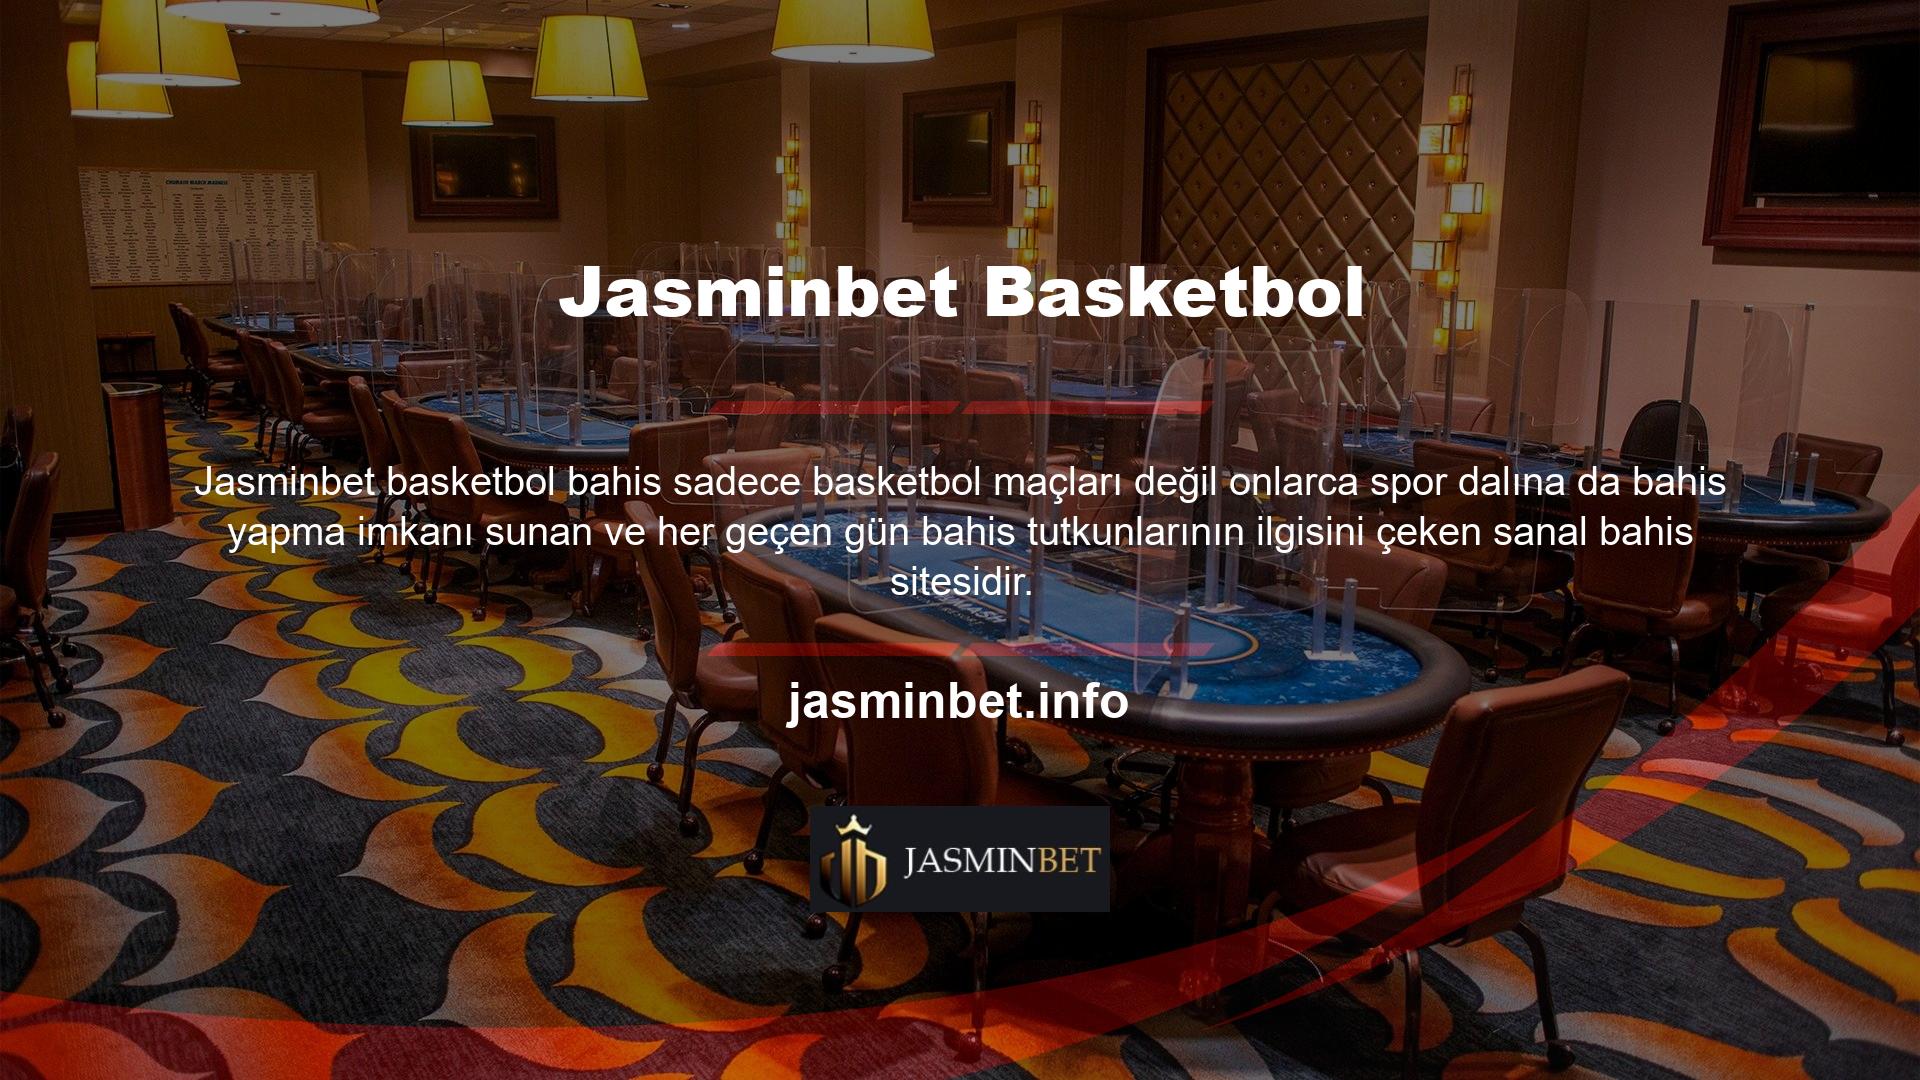 Jasminbet basketbol bahisçisi